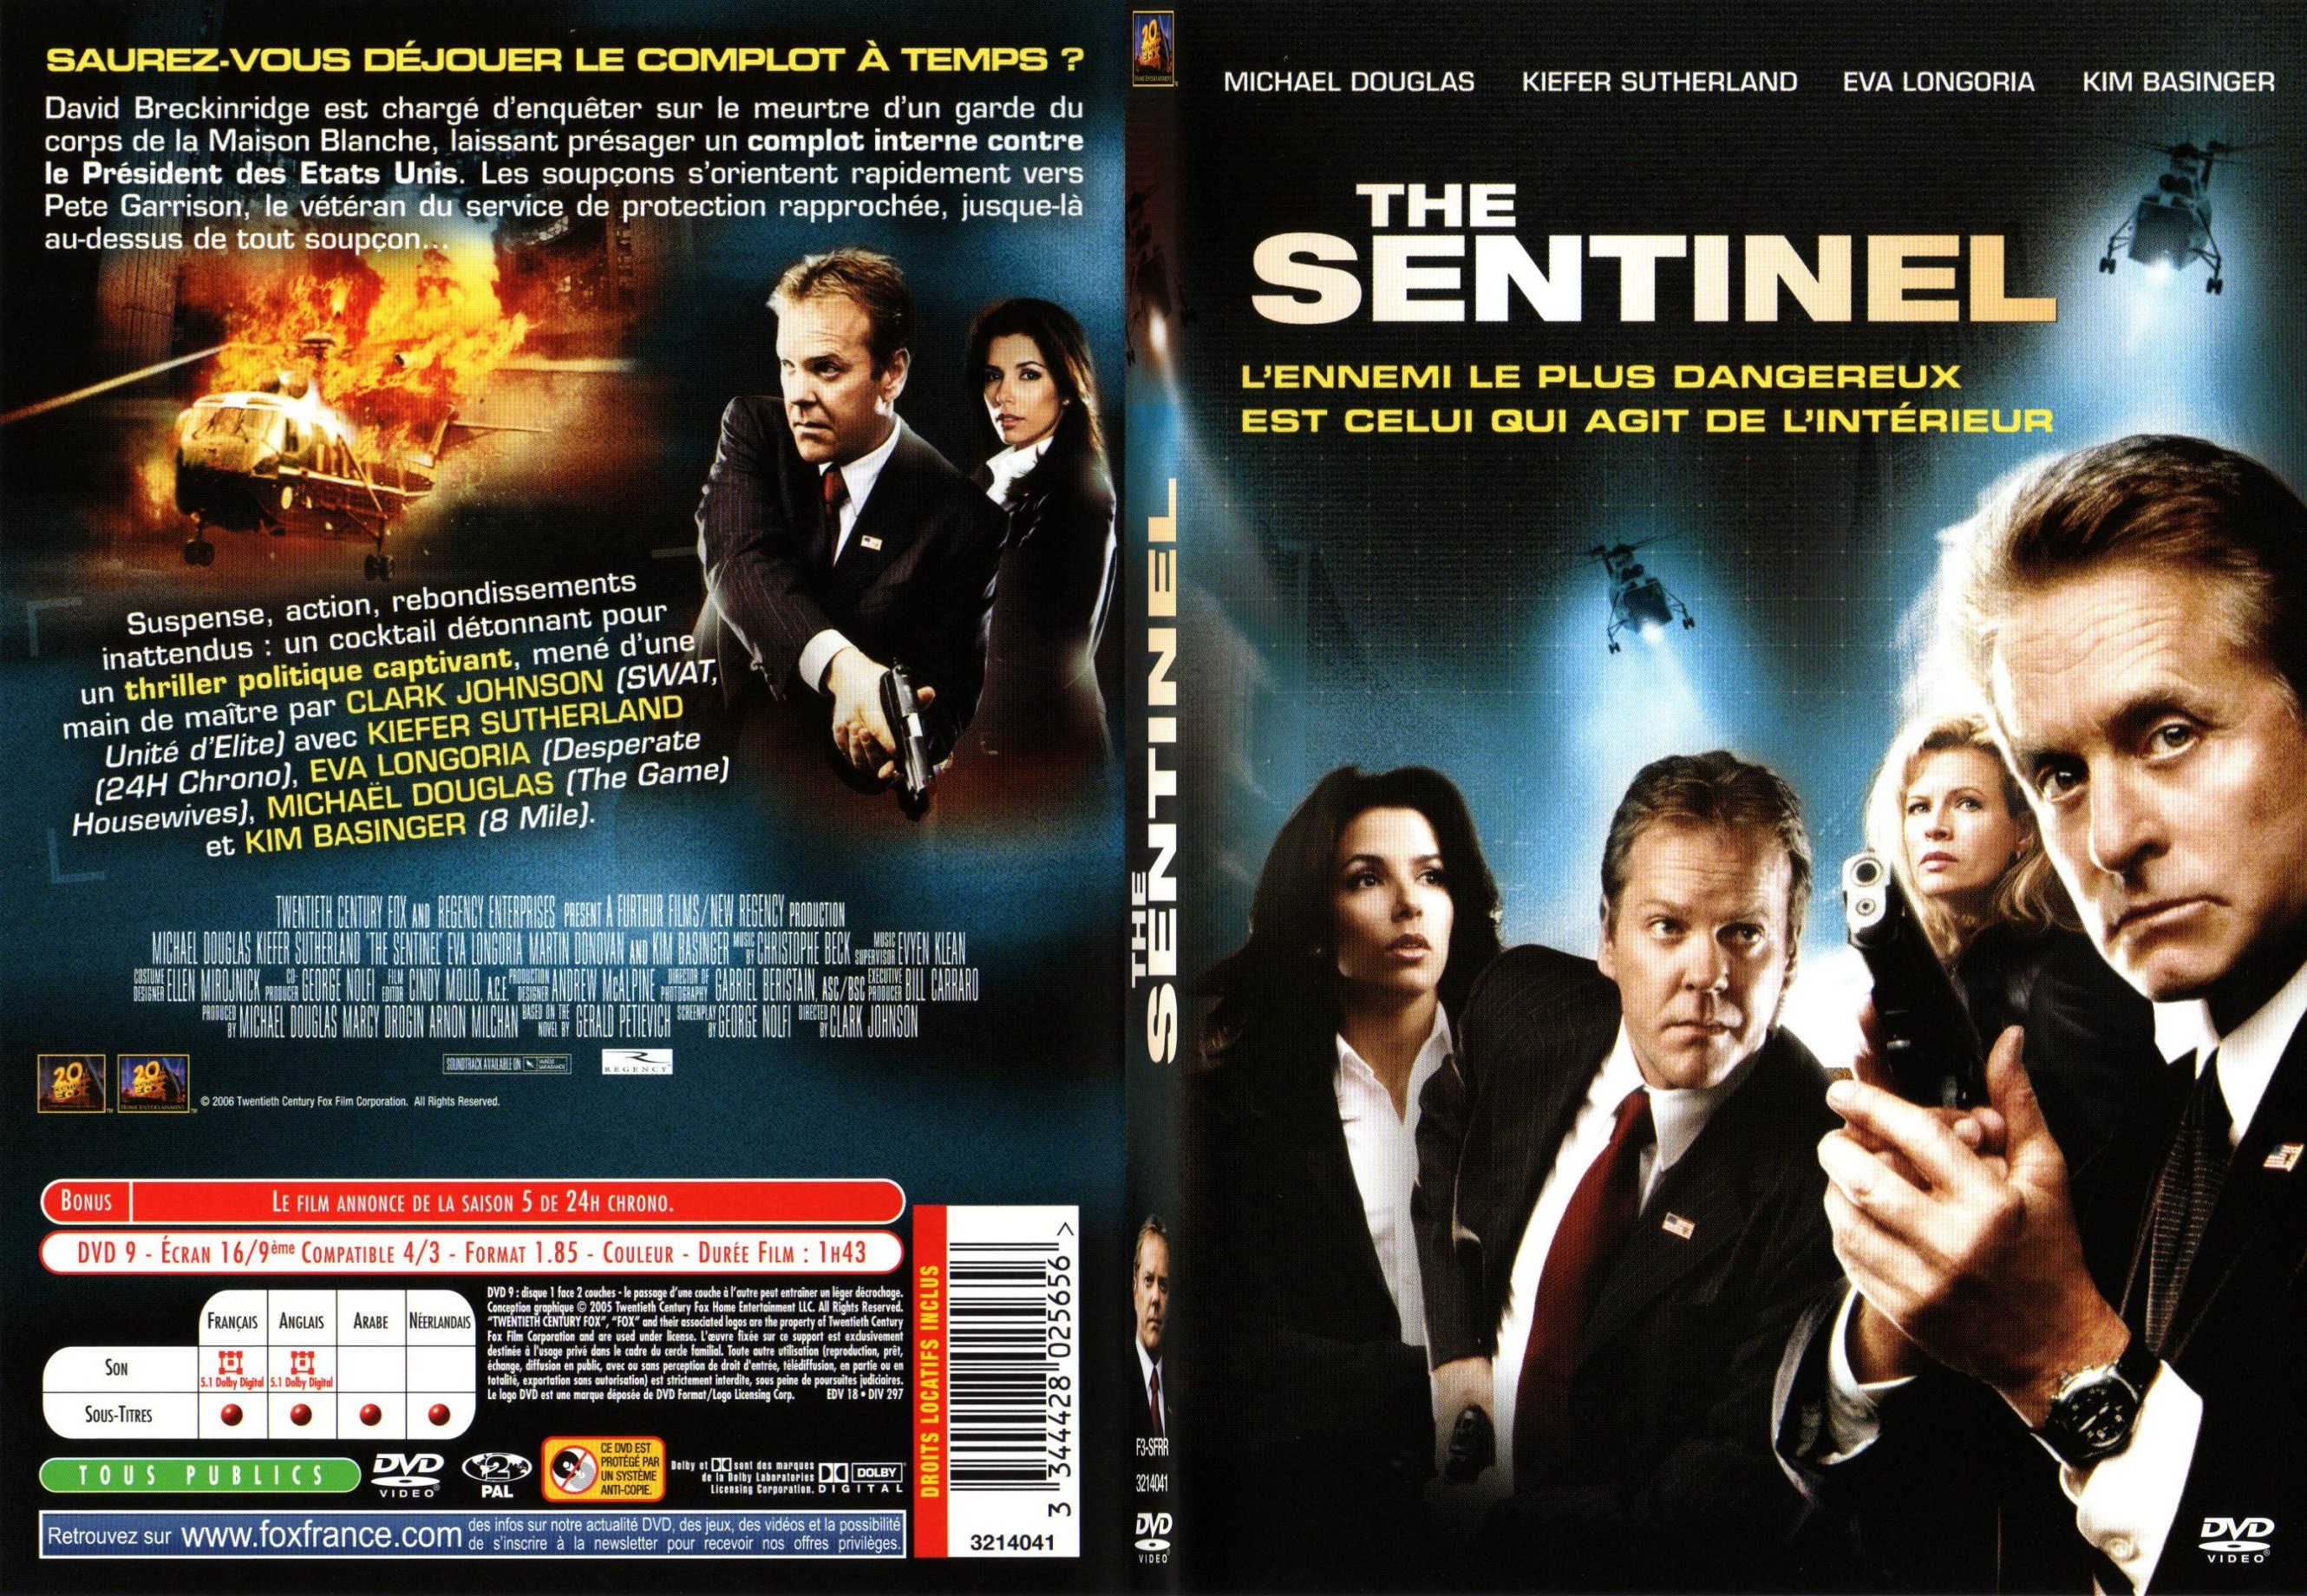 Jaquette DVD The sentinel - SLIM